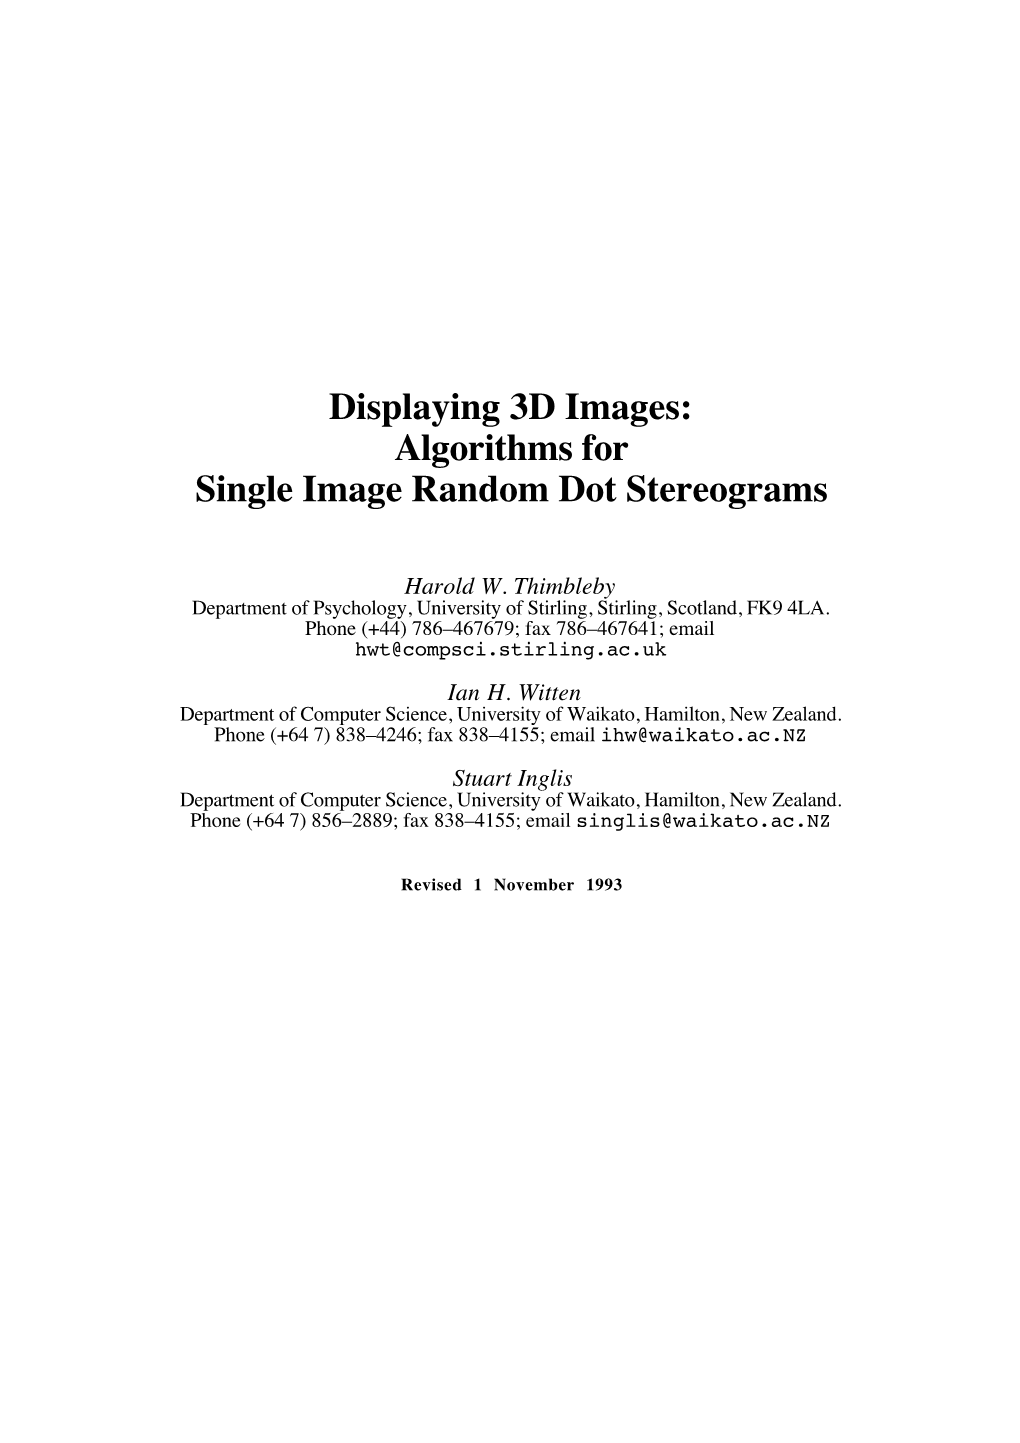 Displaying 3D Images: Algorithms for Single-Image